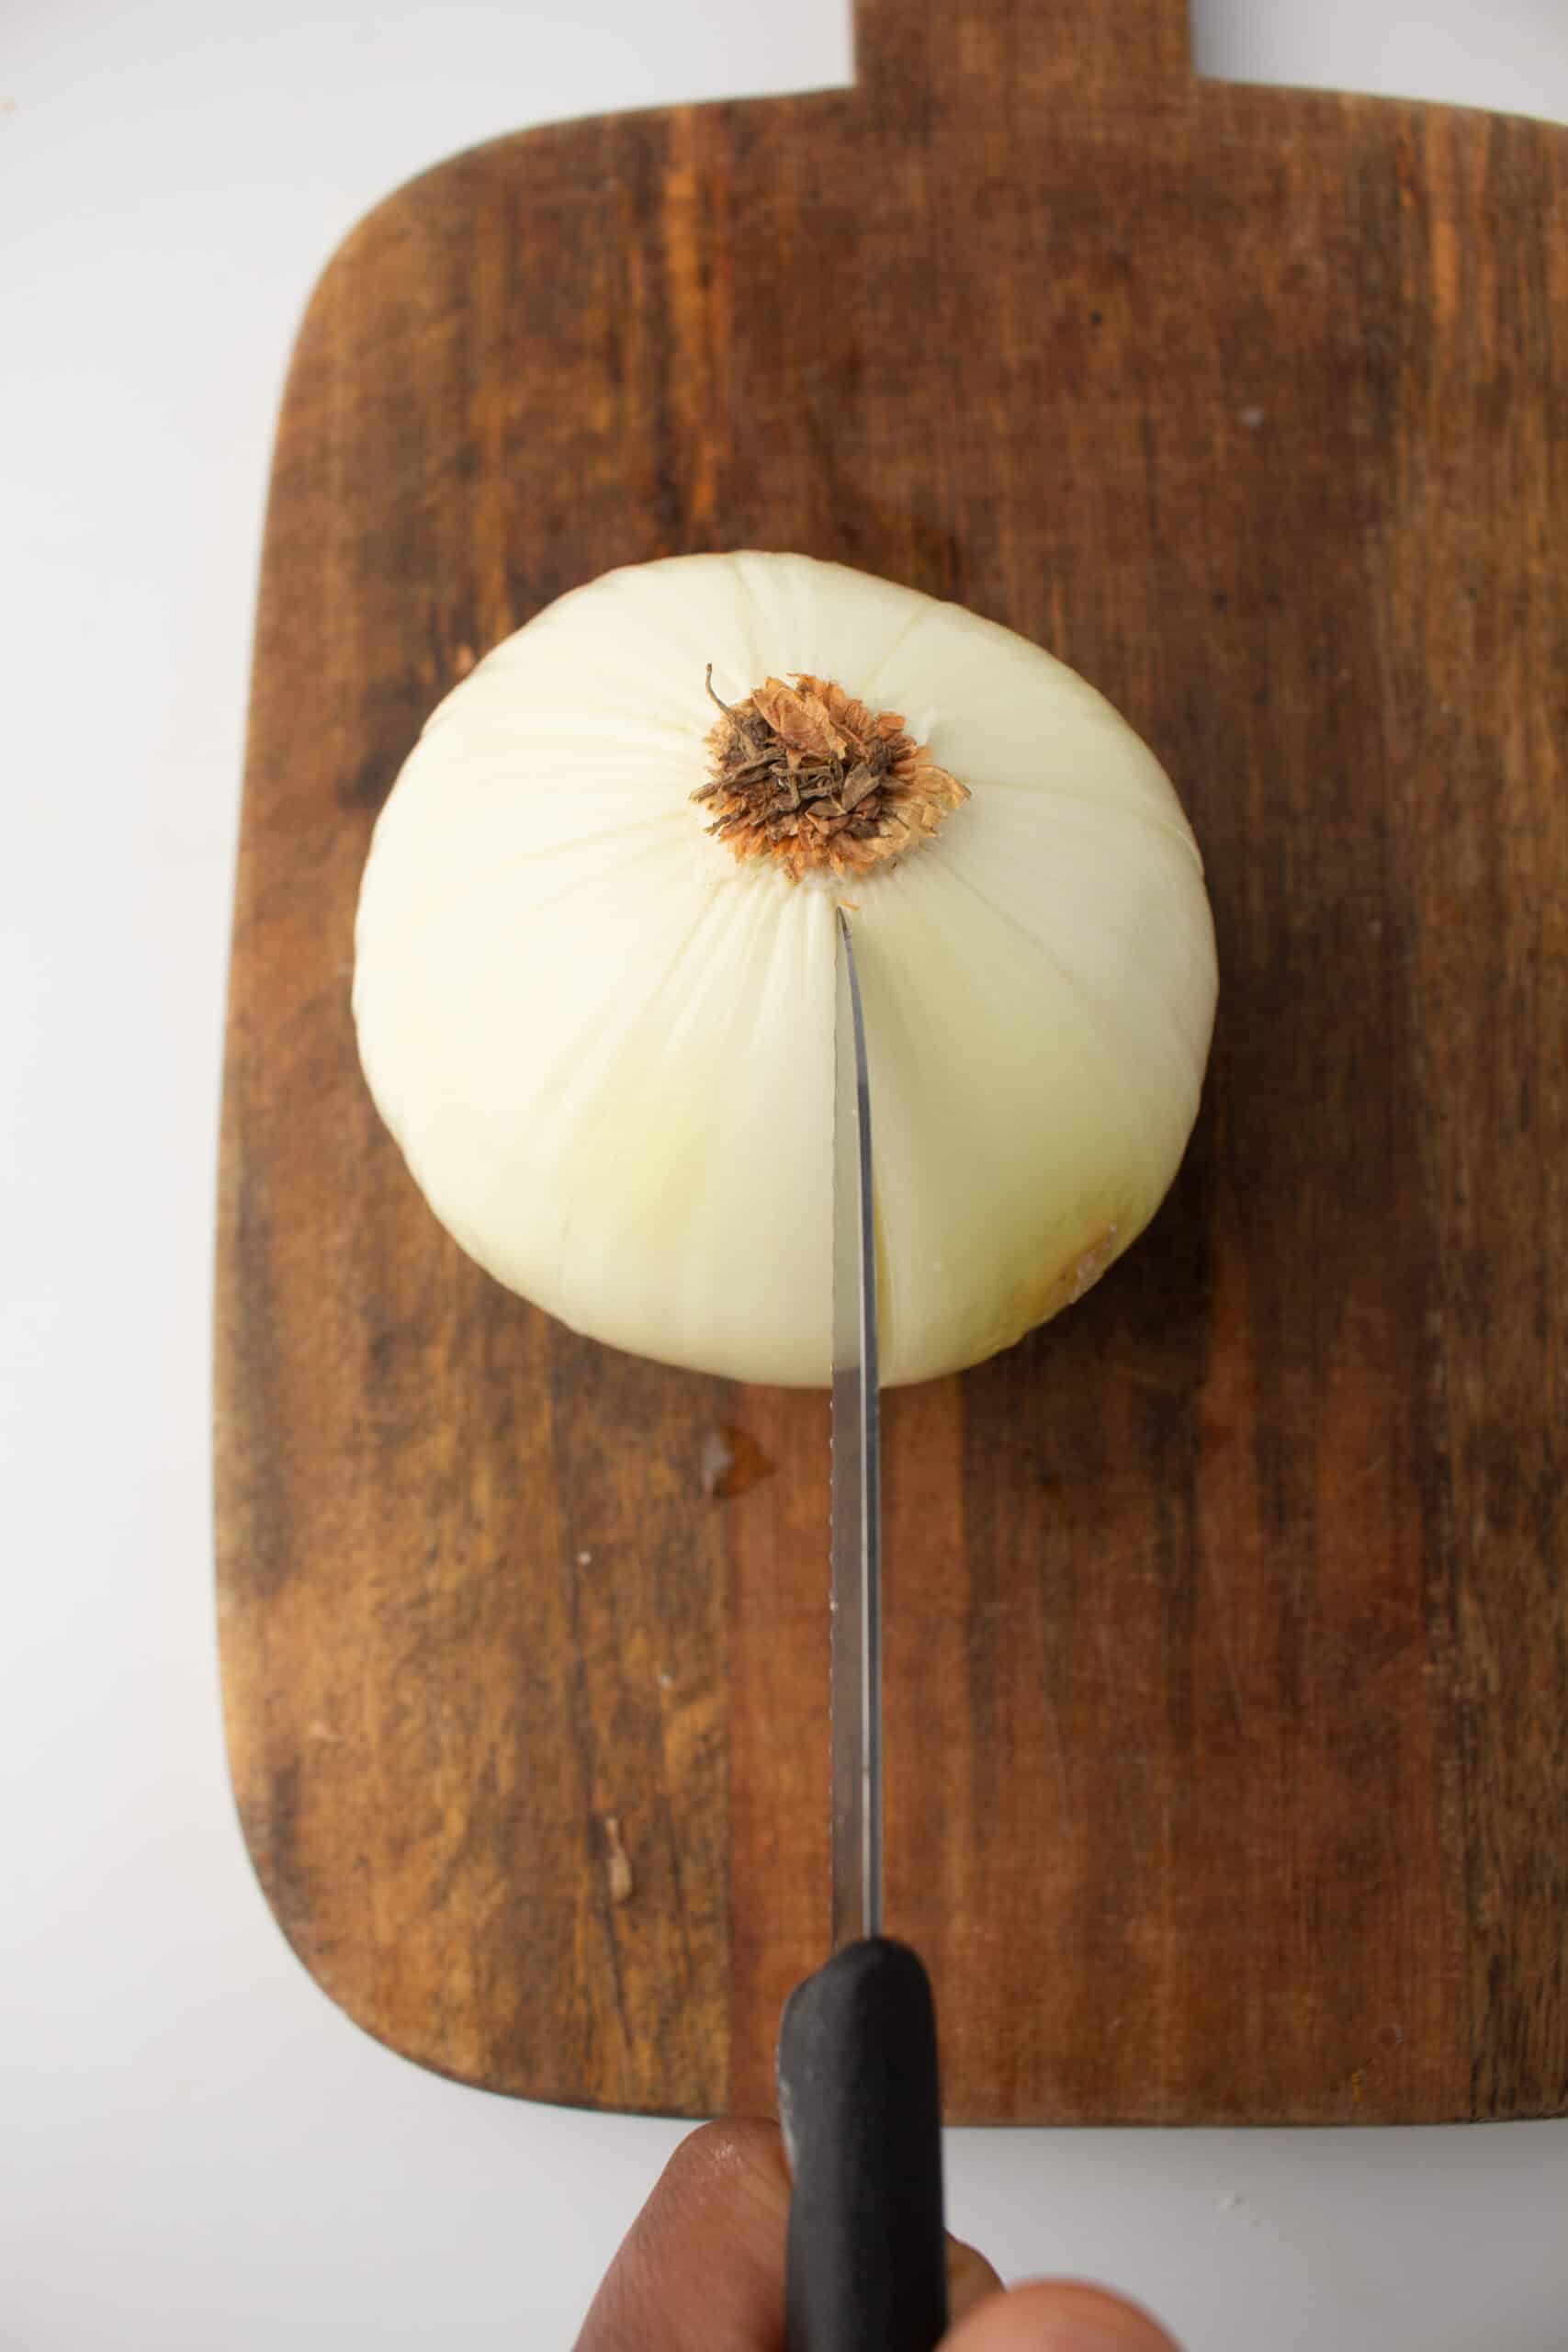 Slicing the onion